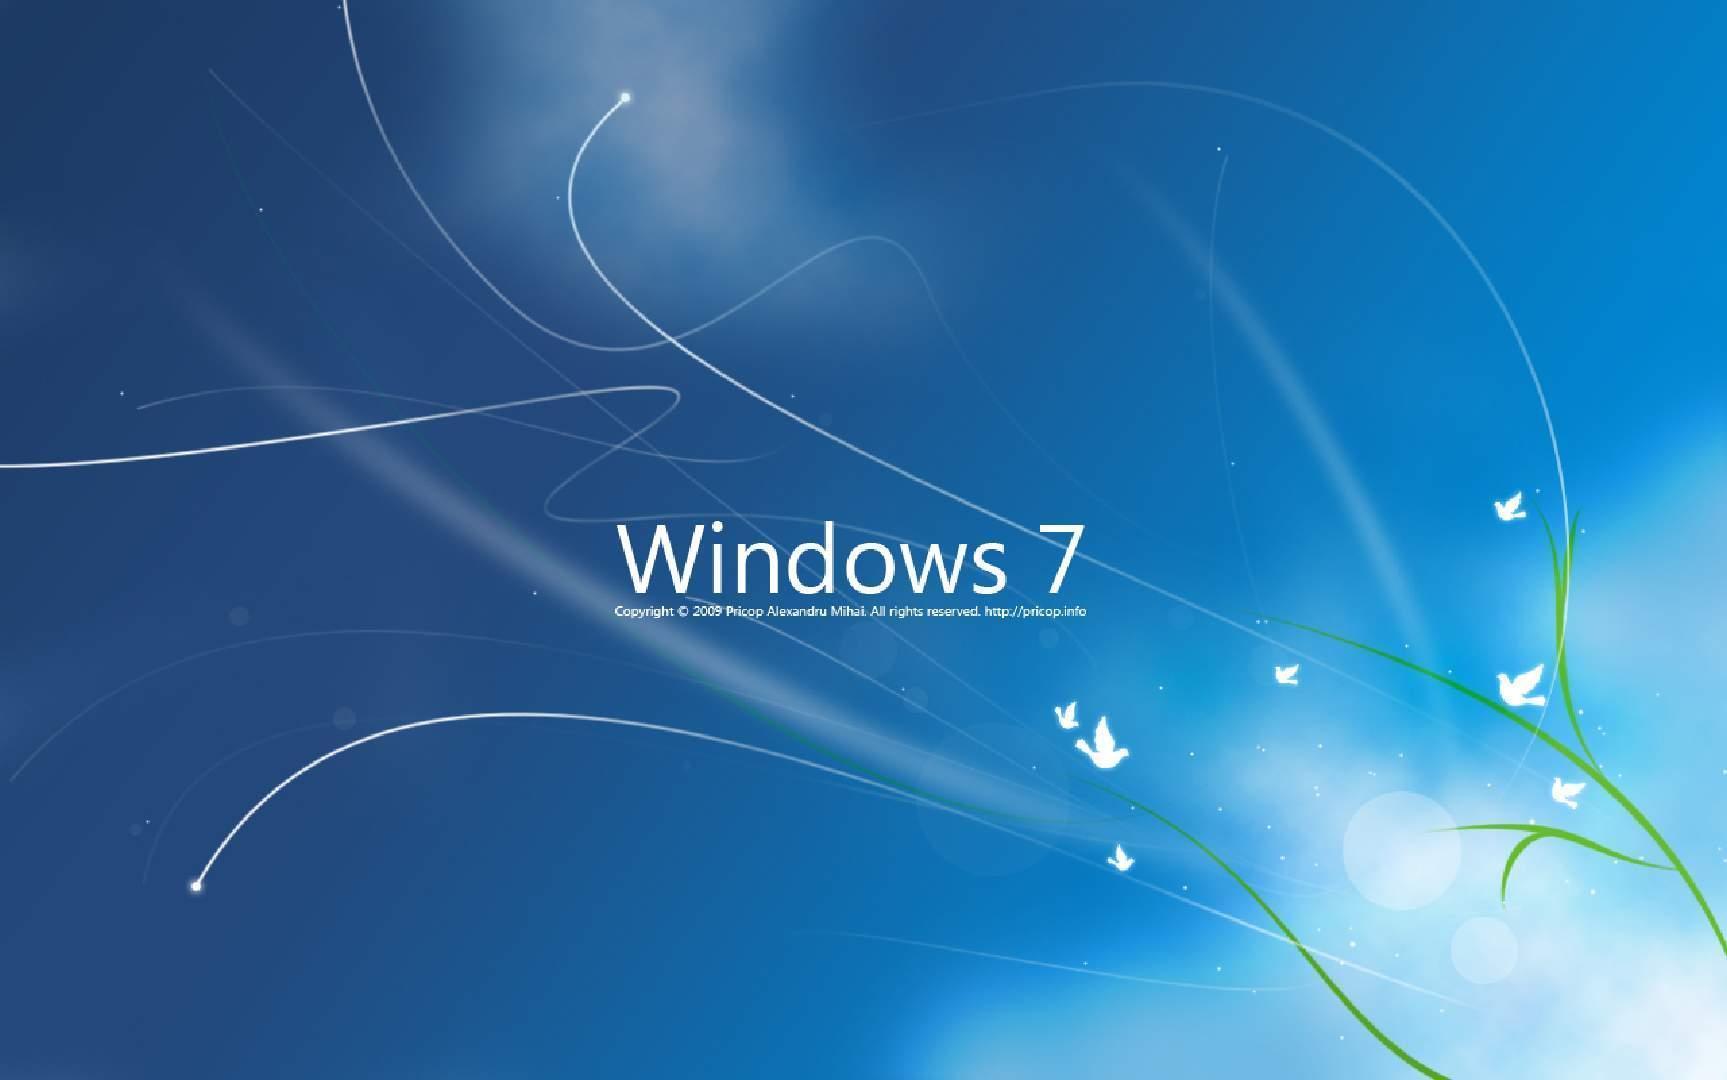 Windows 7 Wallpaper light bluish theme free desktop background